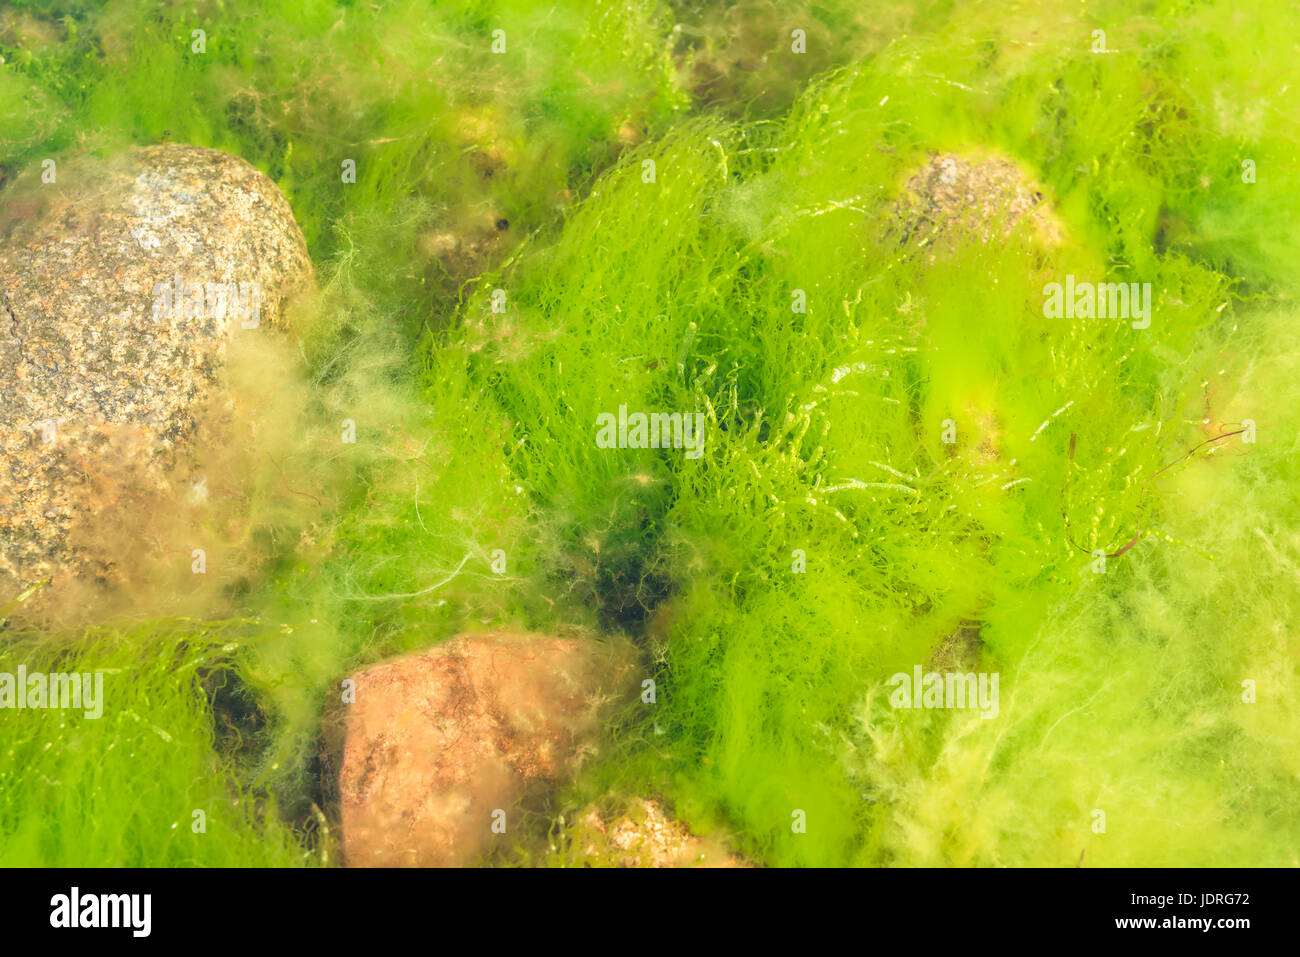 Frisch und grün Gutweed oder Rasen Seetang (Ulva Intestinalis) unter Felsbrocken. Stockfoto